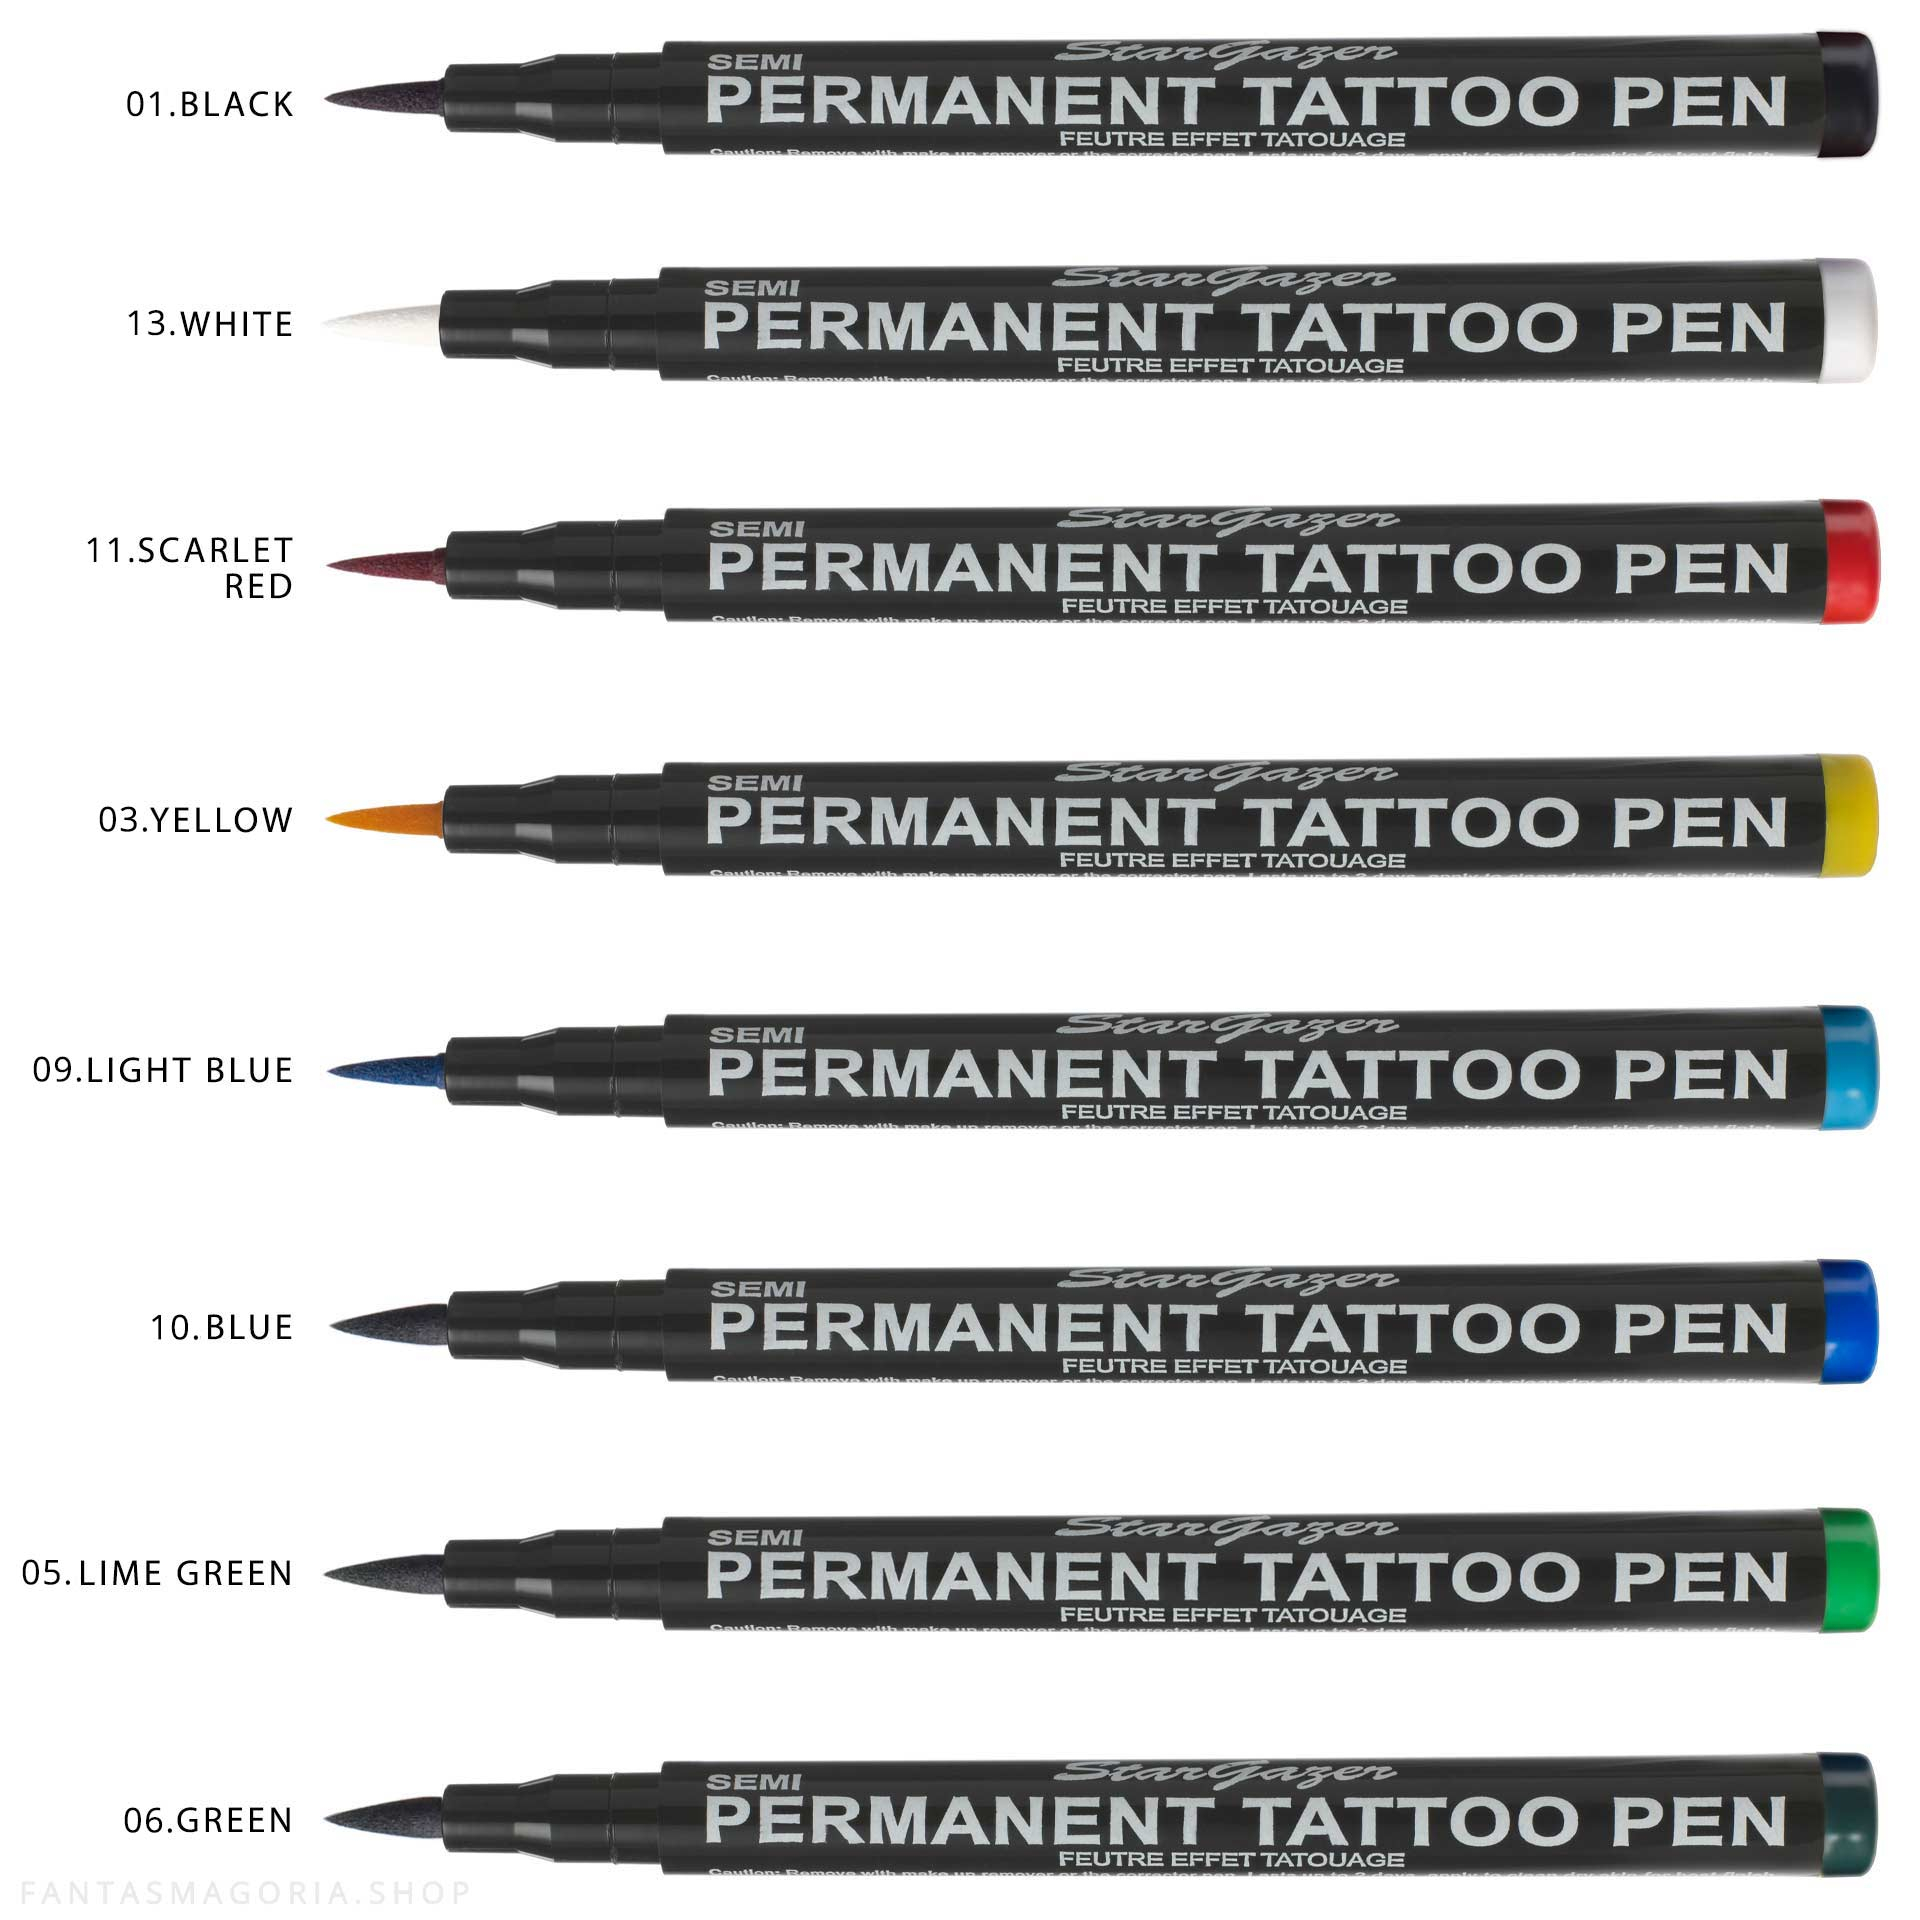 Semi Permanent Tattoo Pen by Stargazer brand